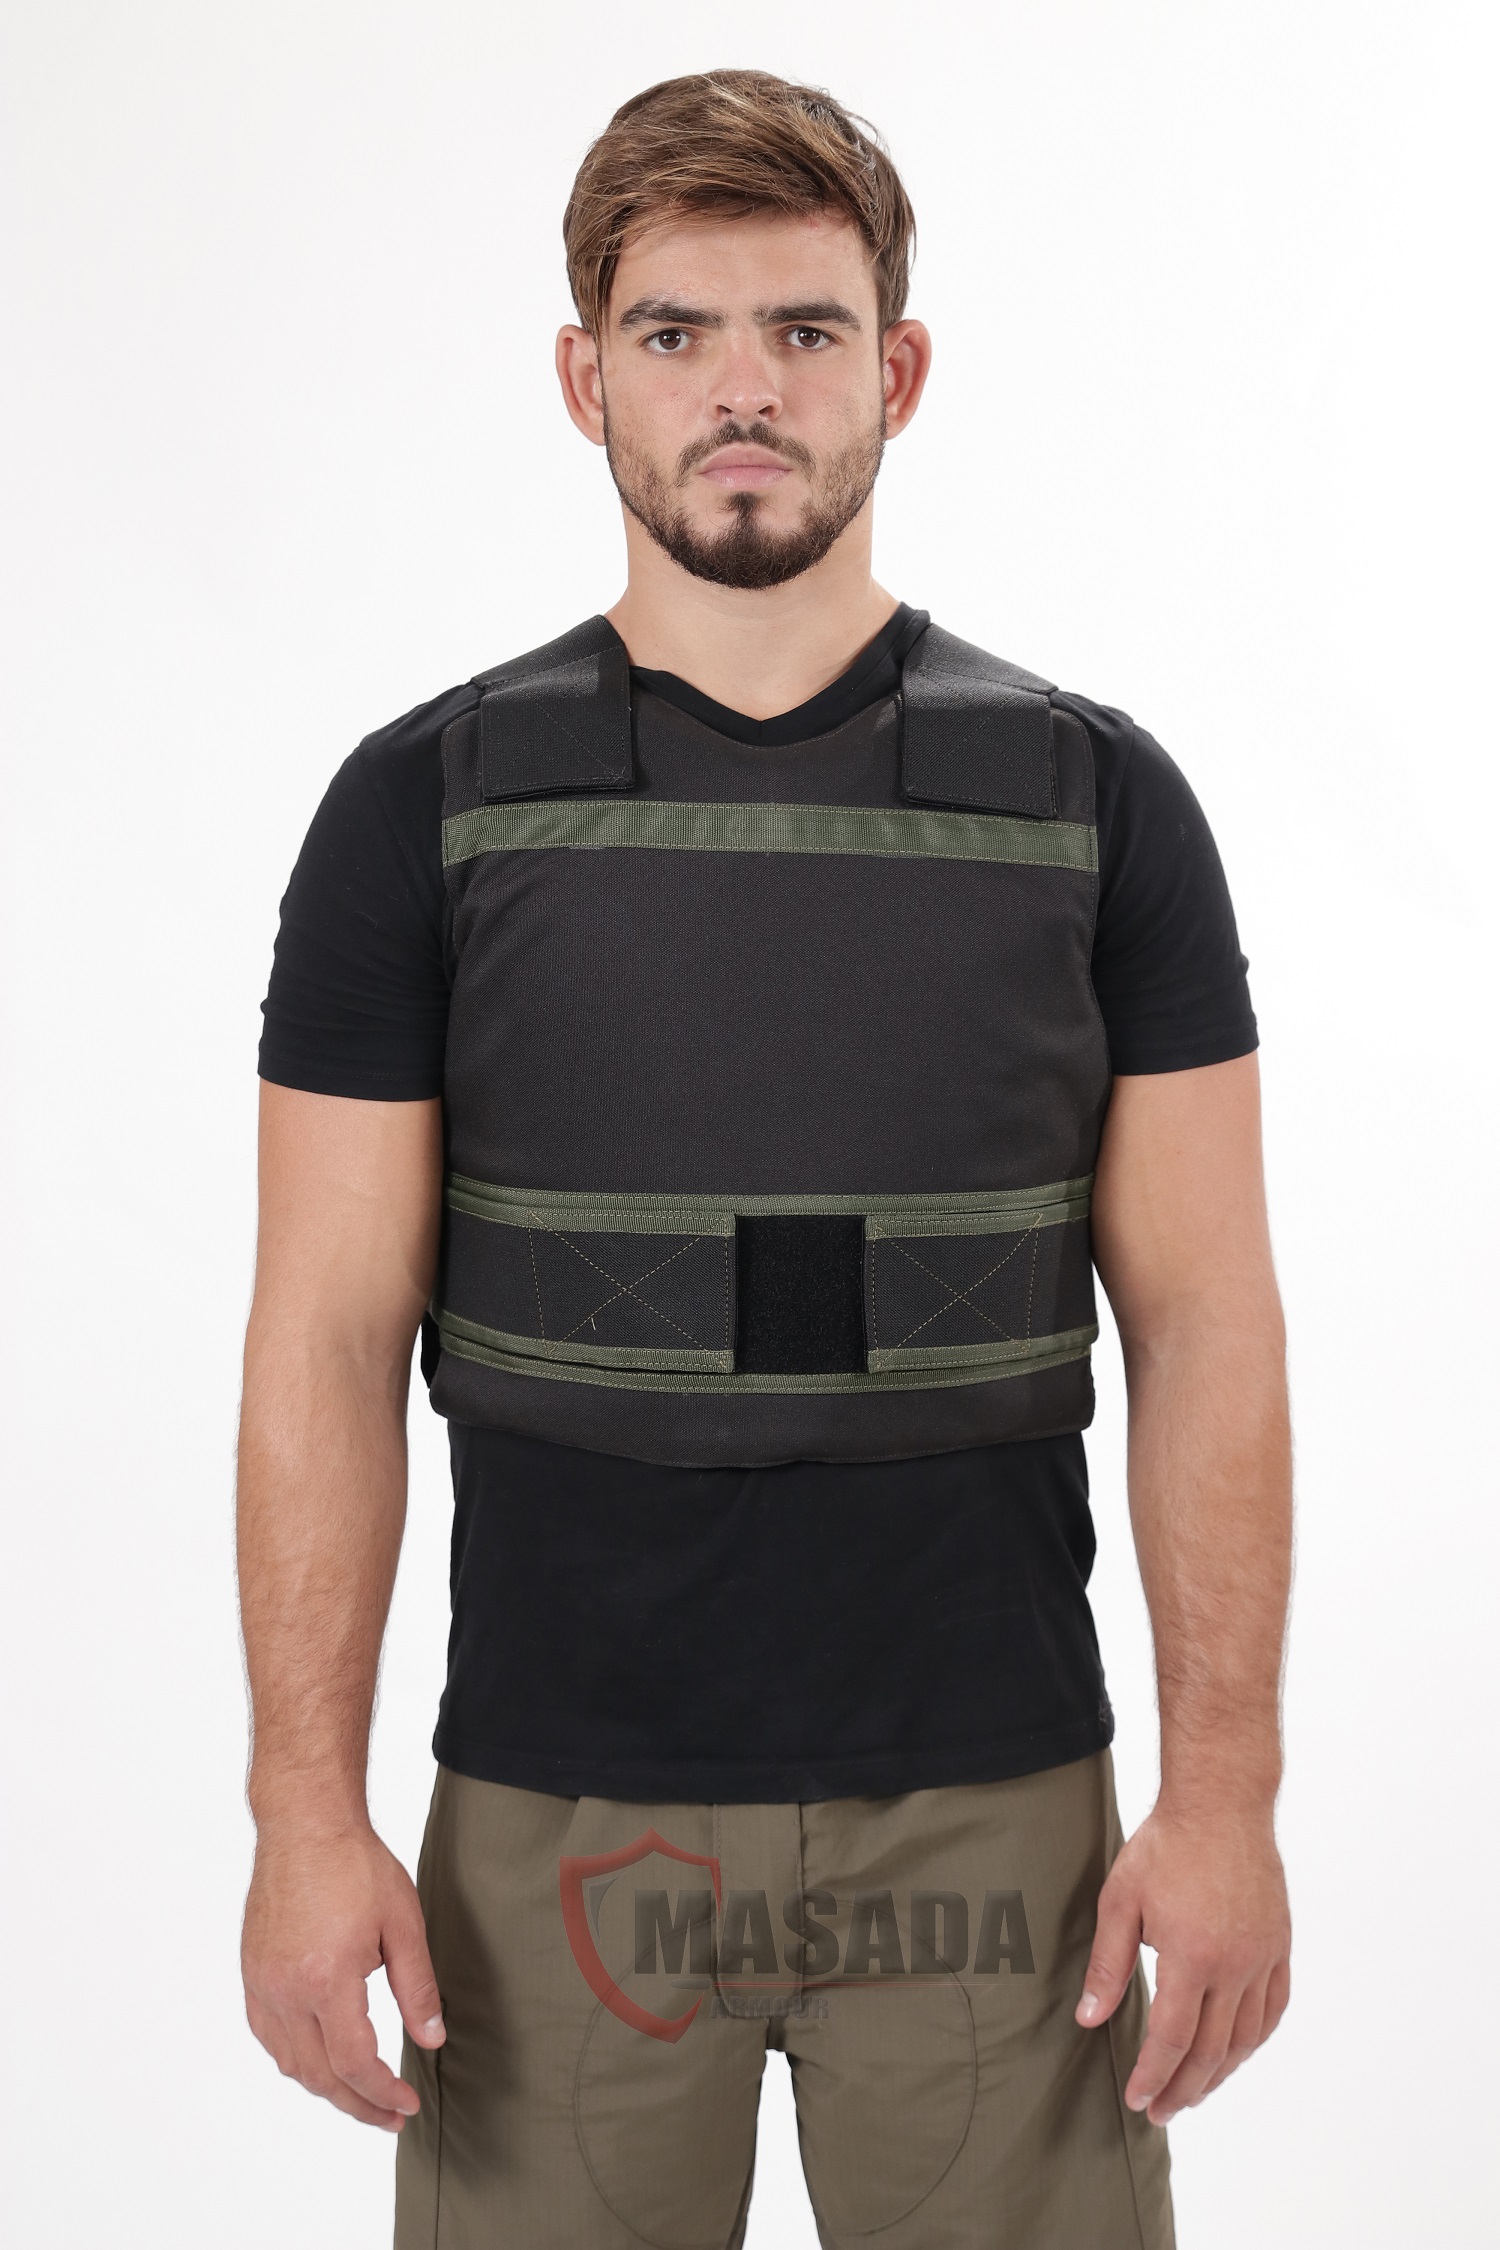 Civilian bulletproof vest